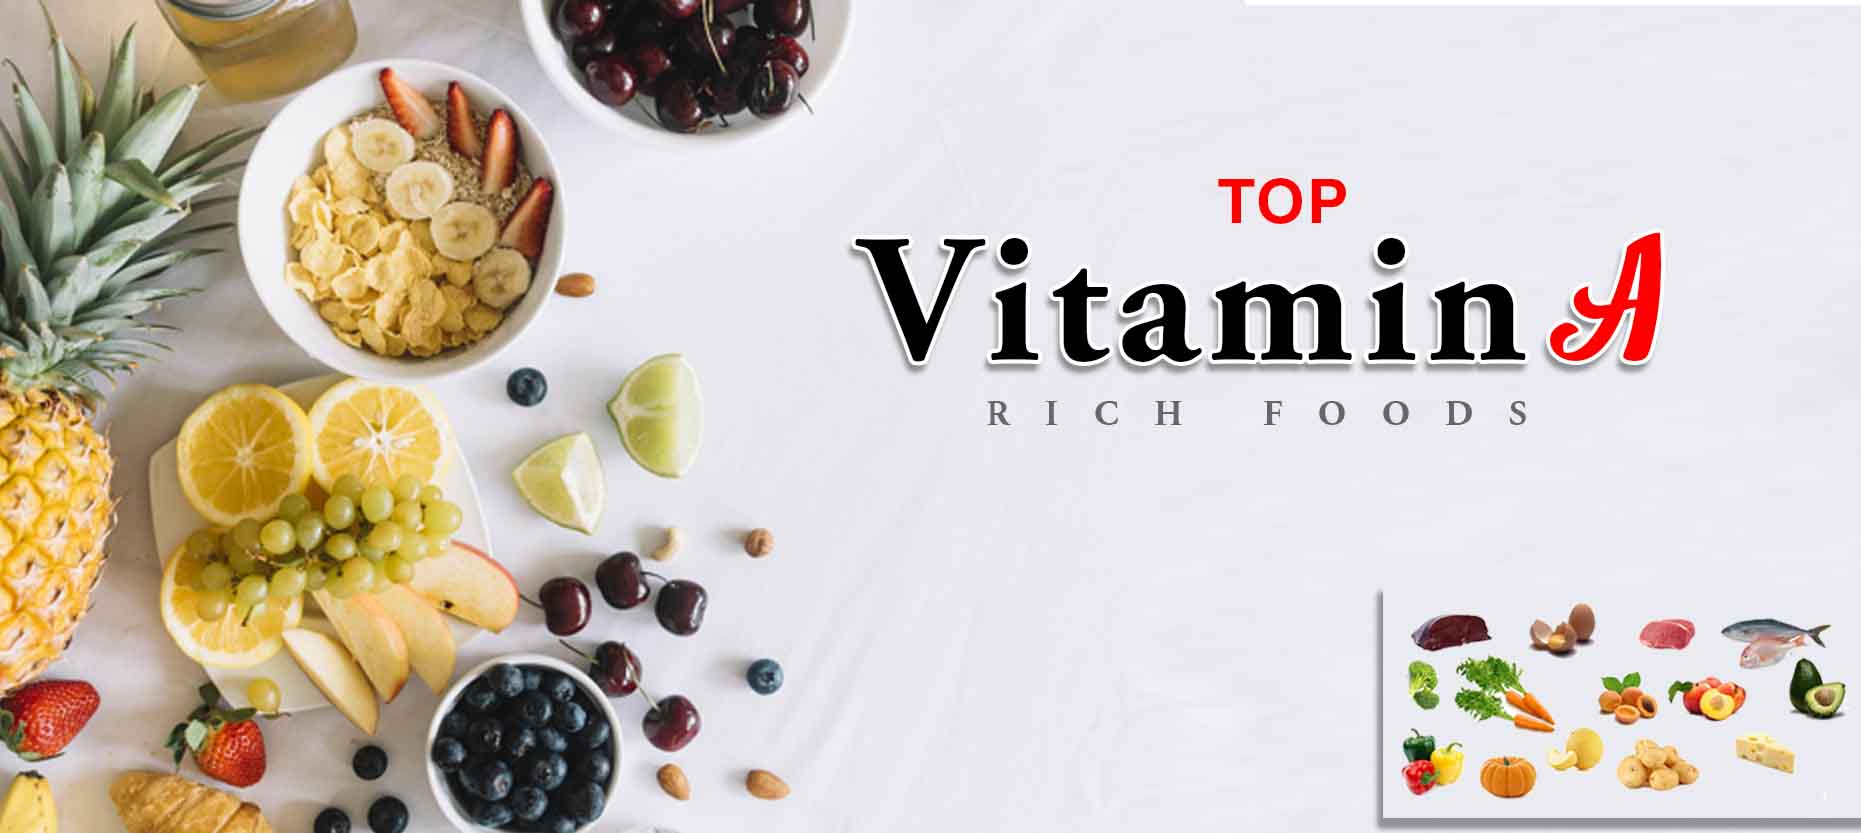 Top Vitamin A Rich Foods